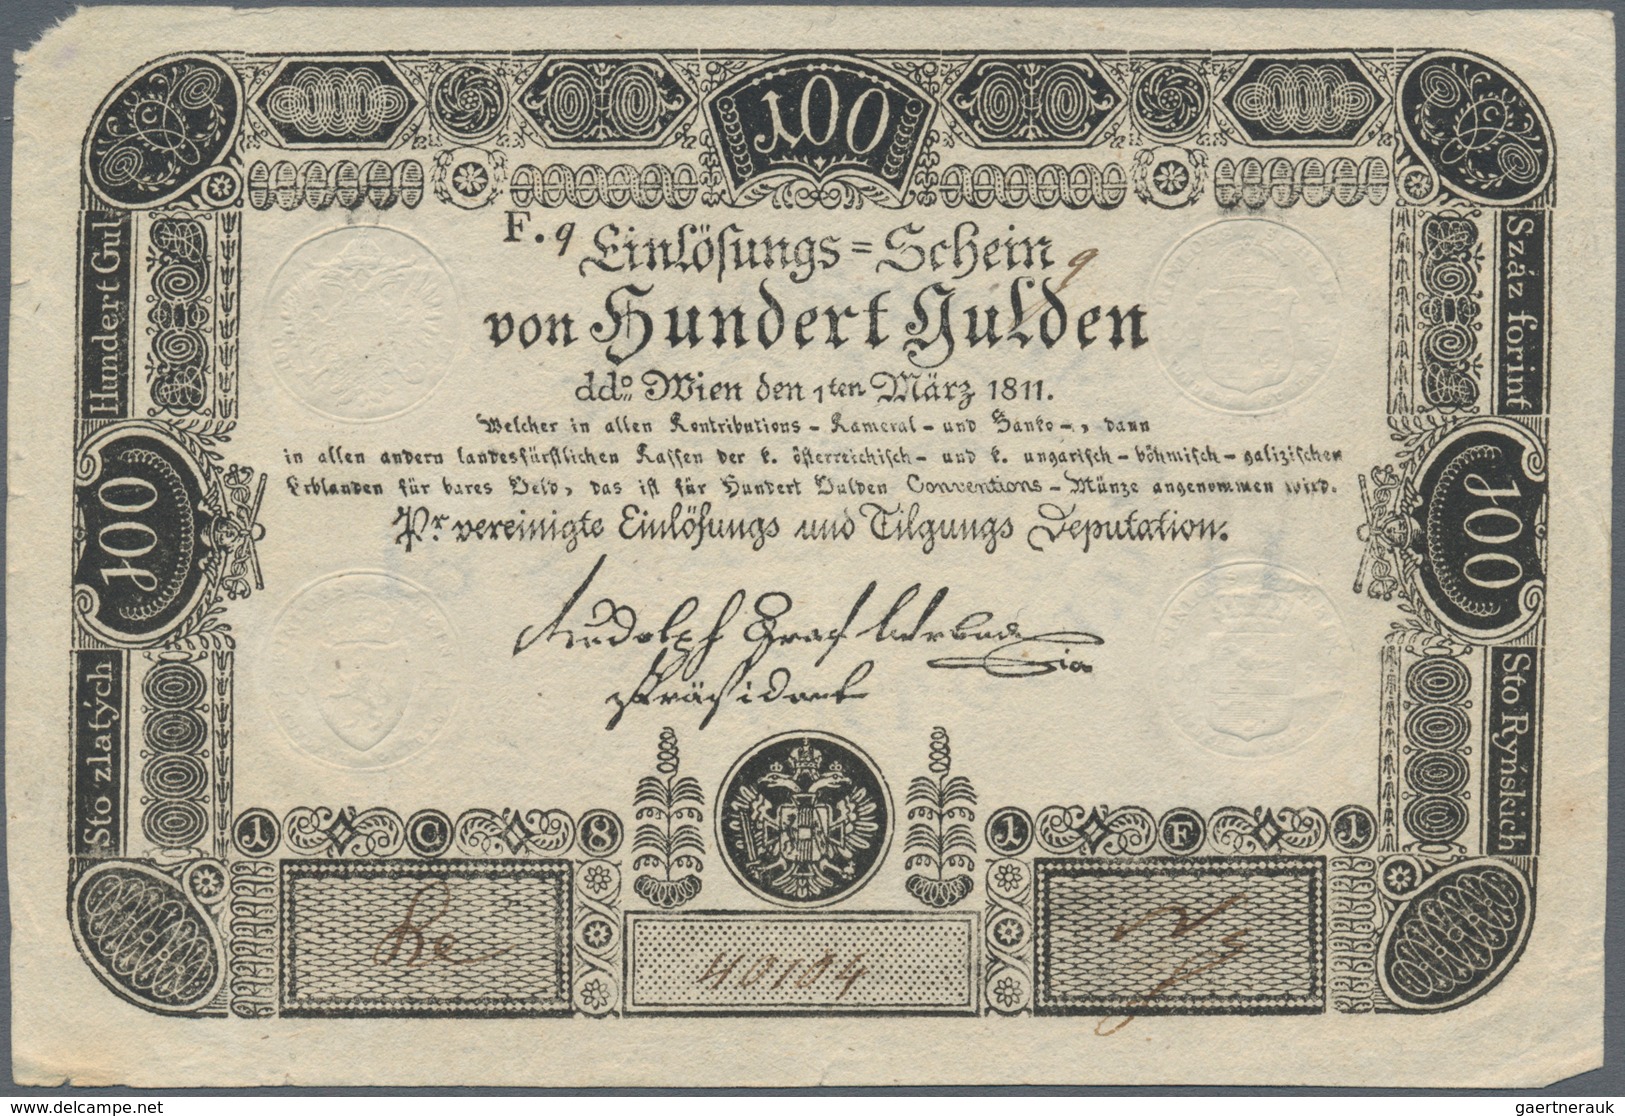 01048 Austria / Österreich: 100 Gulden 1811 Issued Note (not Formular) P. A49a, Highly Rare Banknote, Cent - Austria